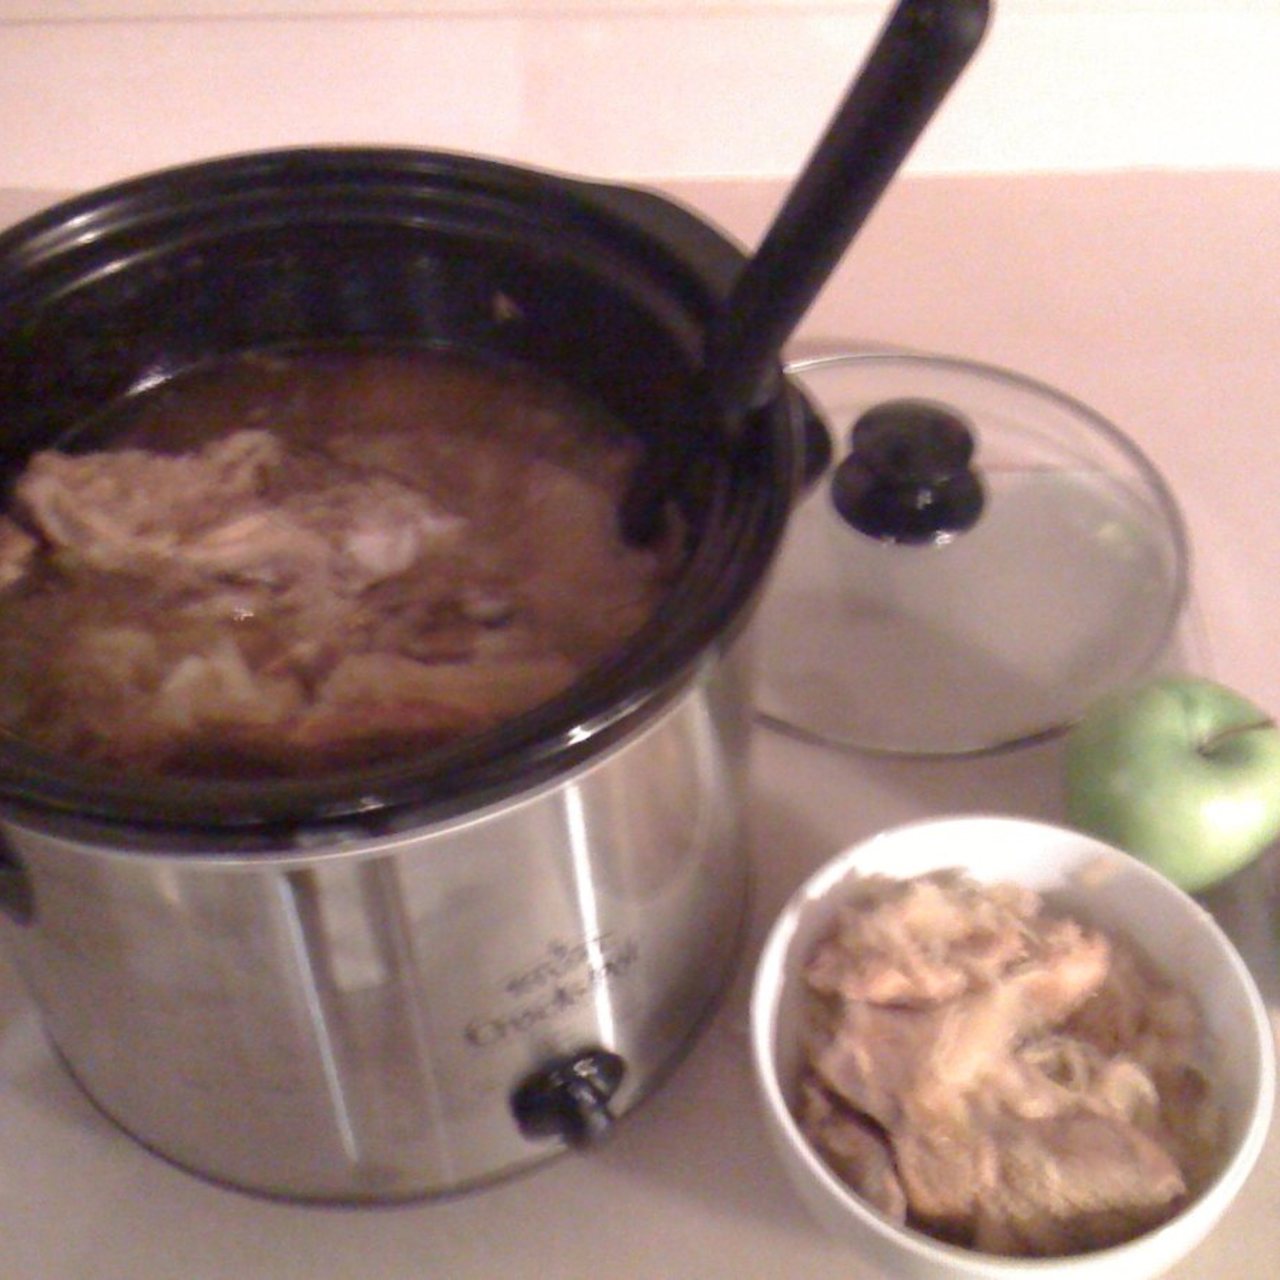 Crockpot Sourkraut and Pork with Apples